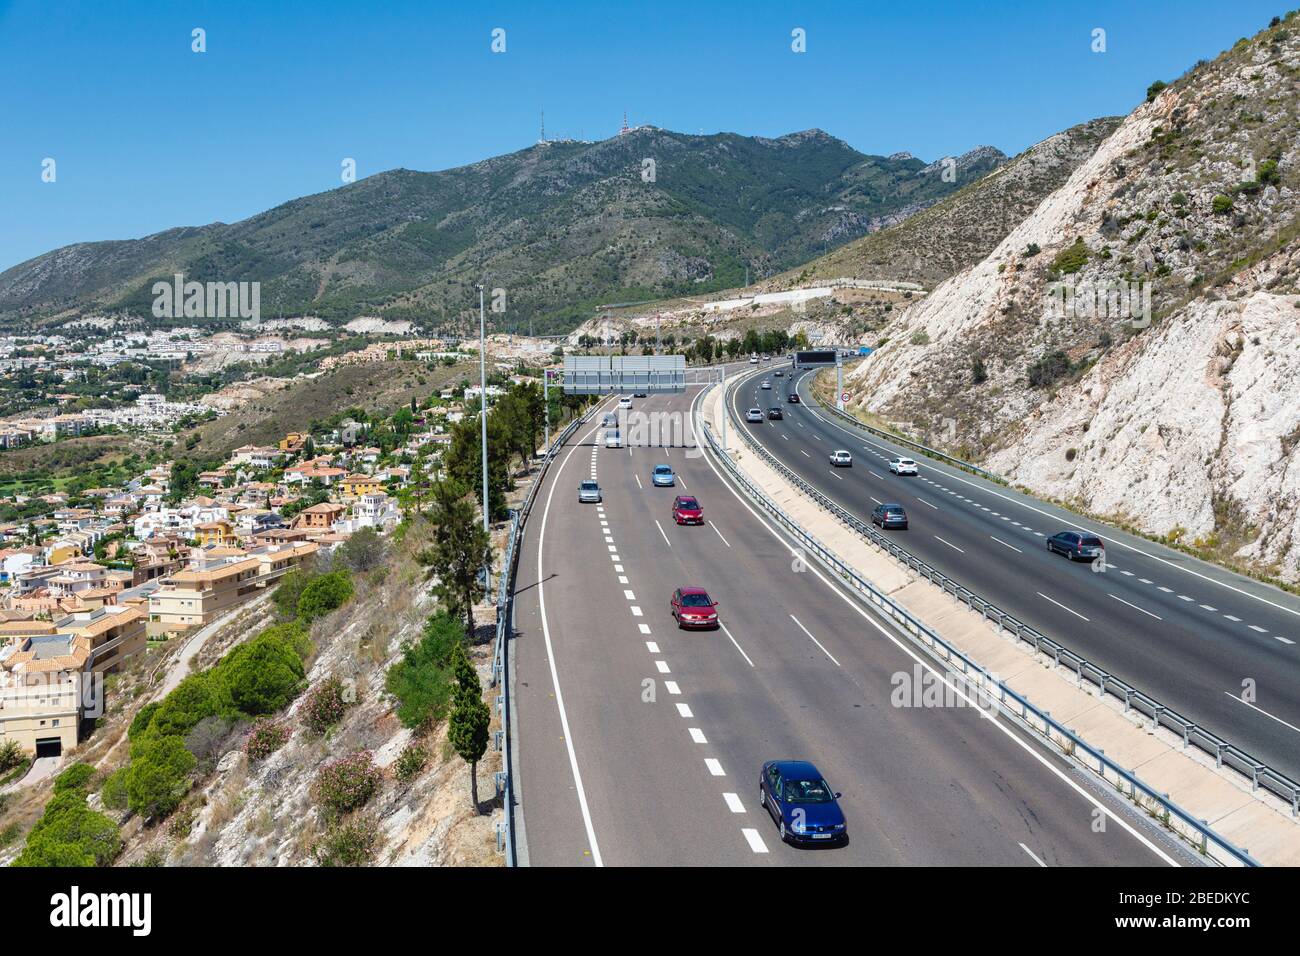 Aerial view of A-7, E-15 motorway.  Costa del Sol,  Malaga Province, Spain.  The town to the left is Arroyo de la Miel. Stock Photo